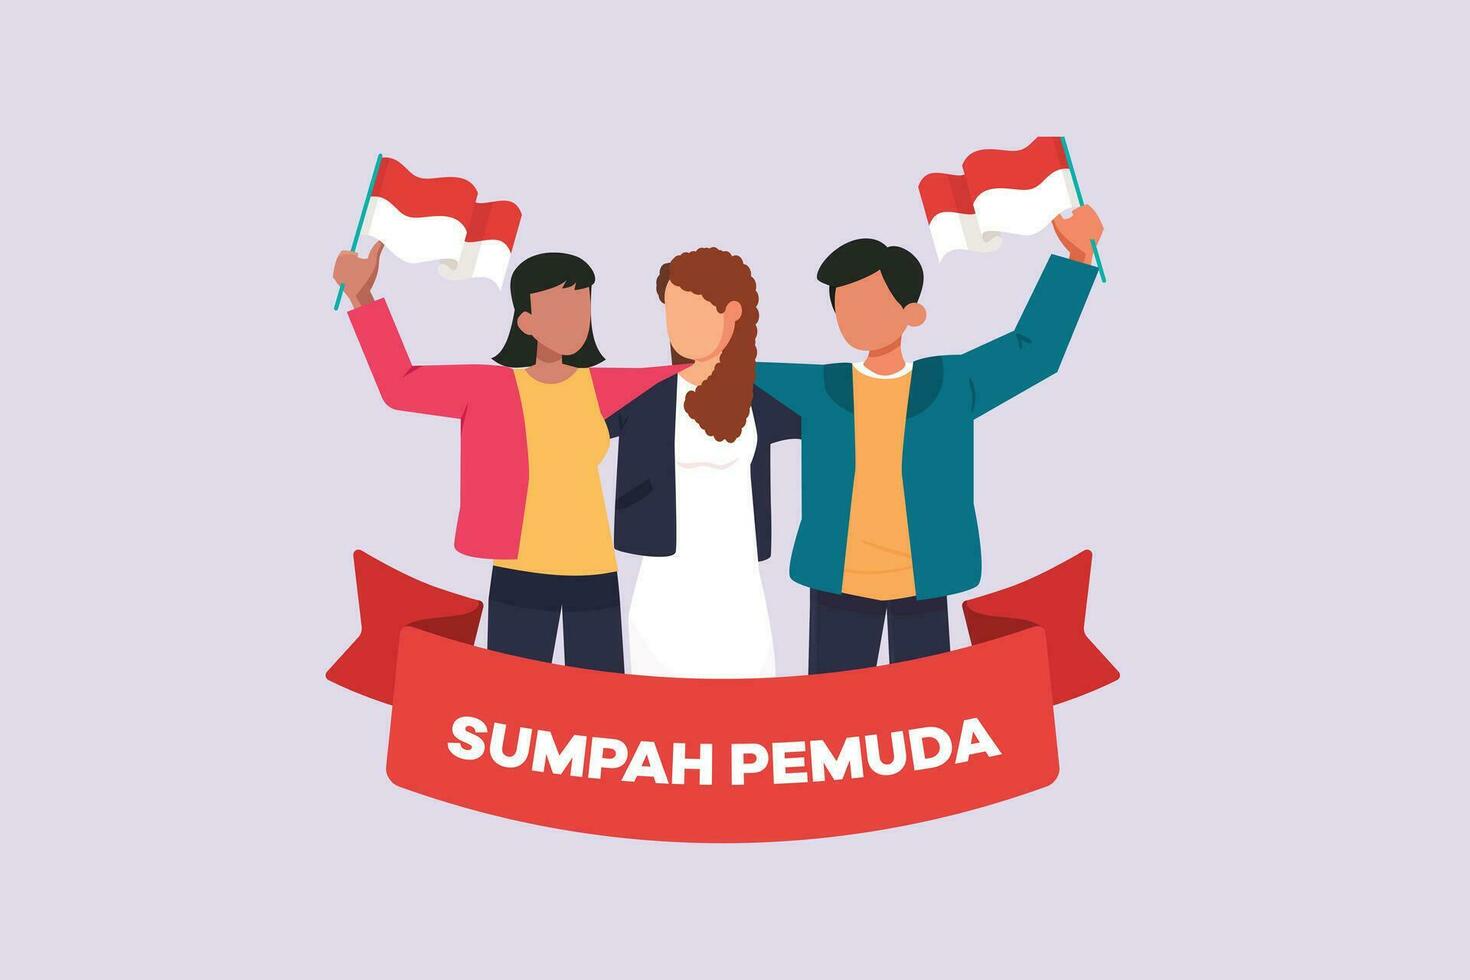 Selamat Hari Sumpah Pemuda. Translation Happy Indonesian Youth Pledge. Colored flat vector illustration isolated.